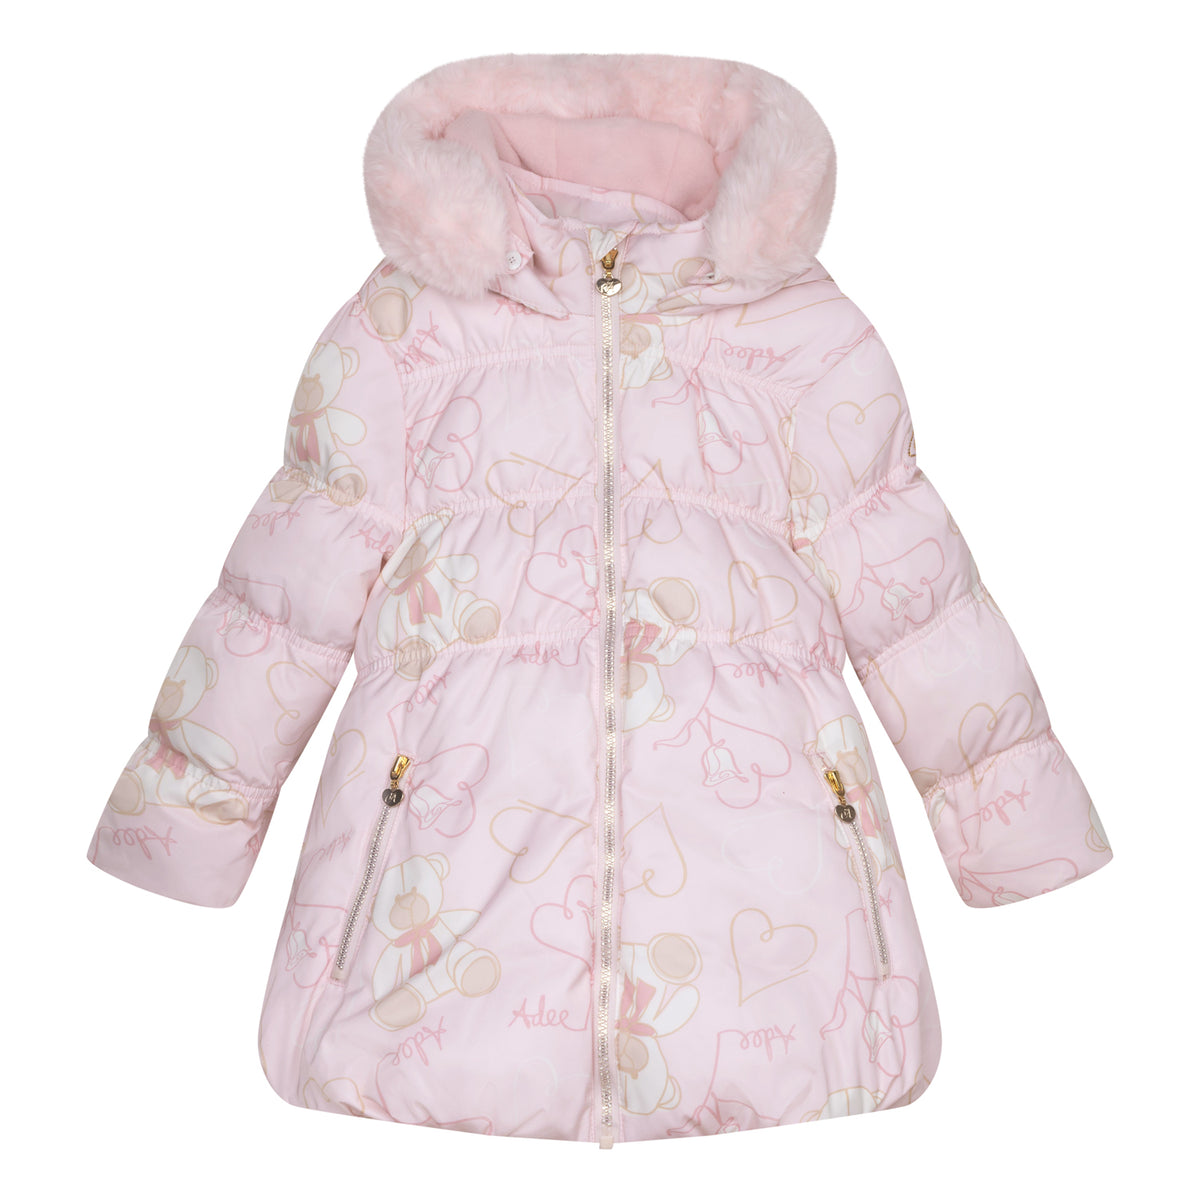 A Dee Girls Pink 'Stella' Teddy Coat